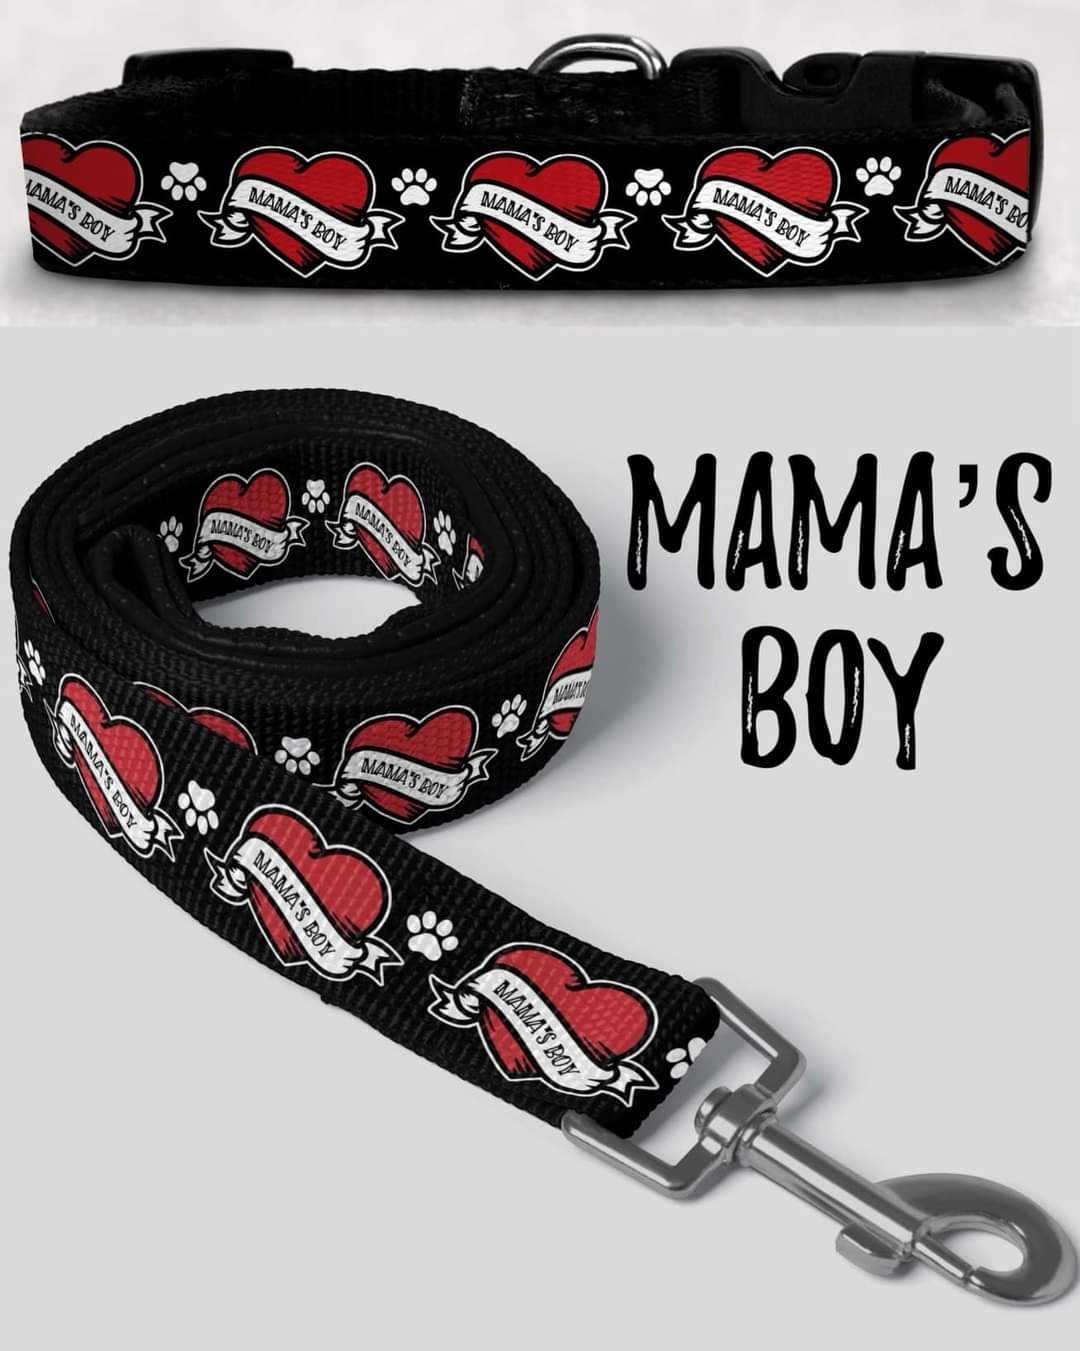 Mamas boy custom leash and collar set